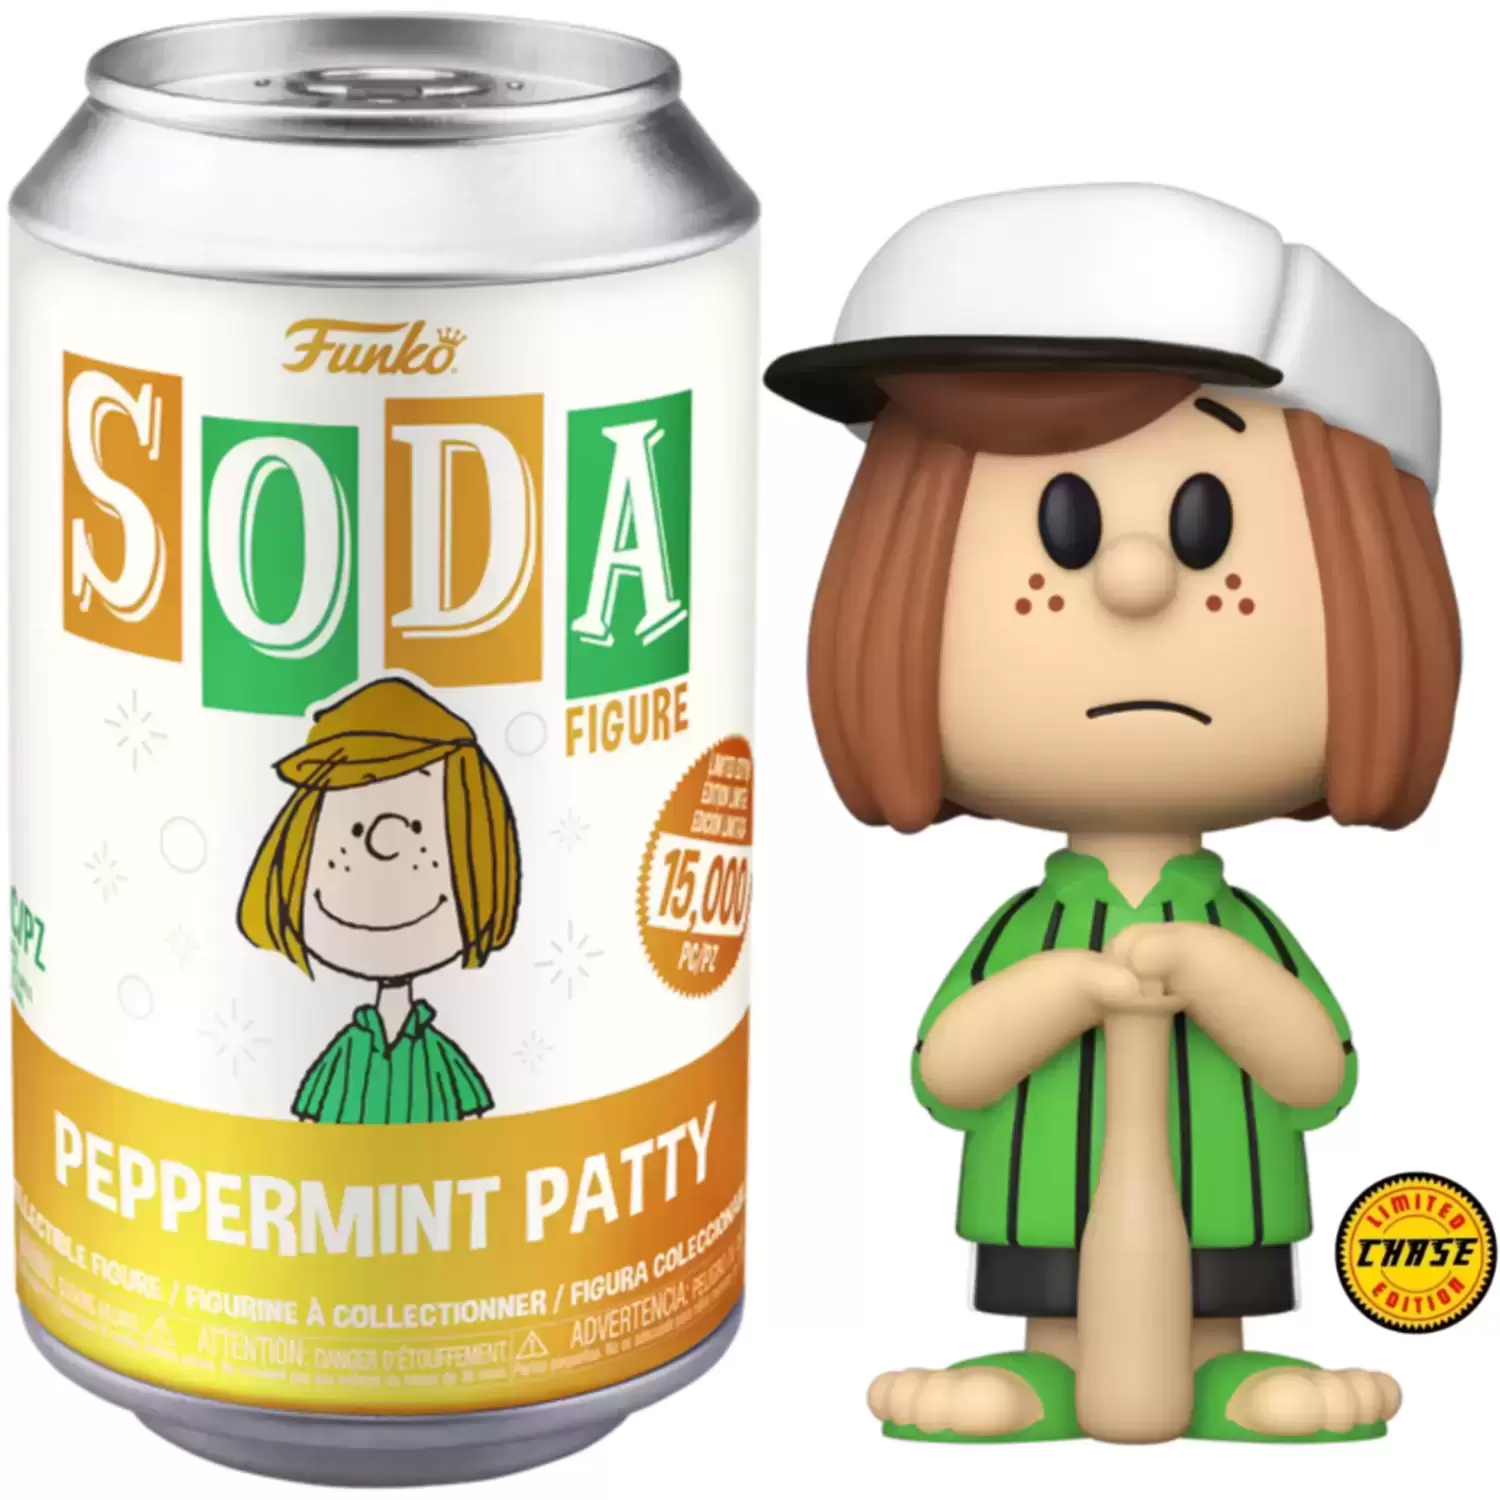 Vinyl Soda! - Peanuts - Peppermint Patty Chase